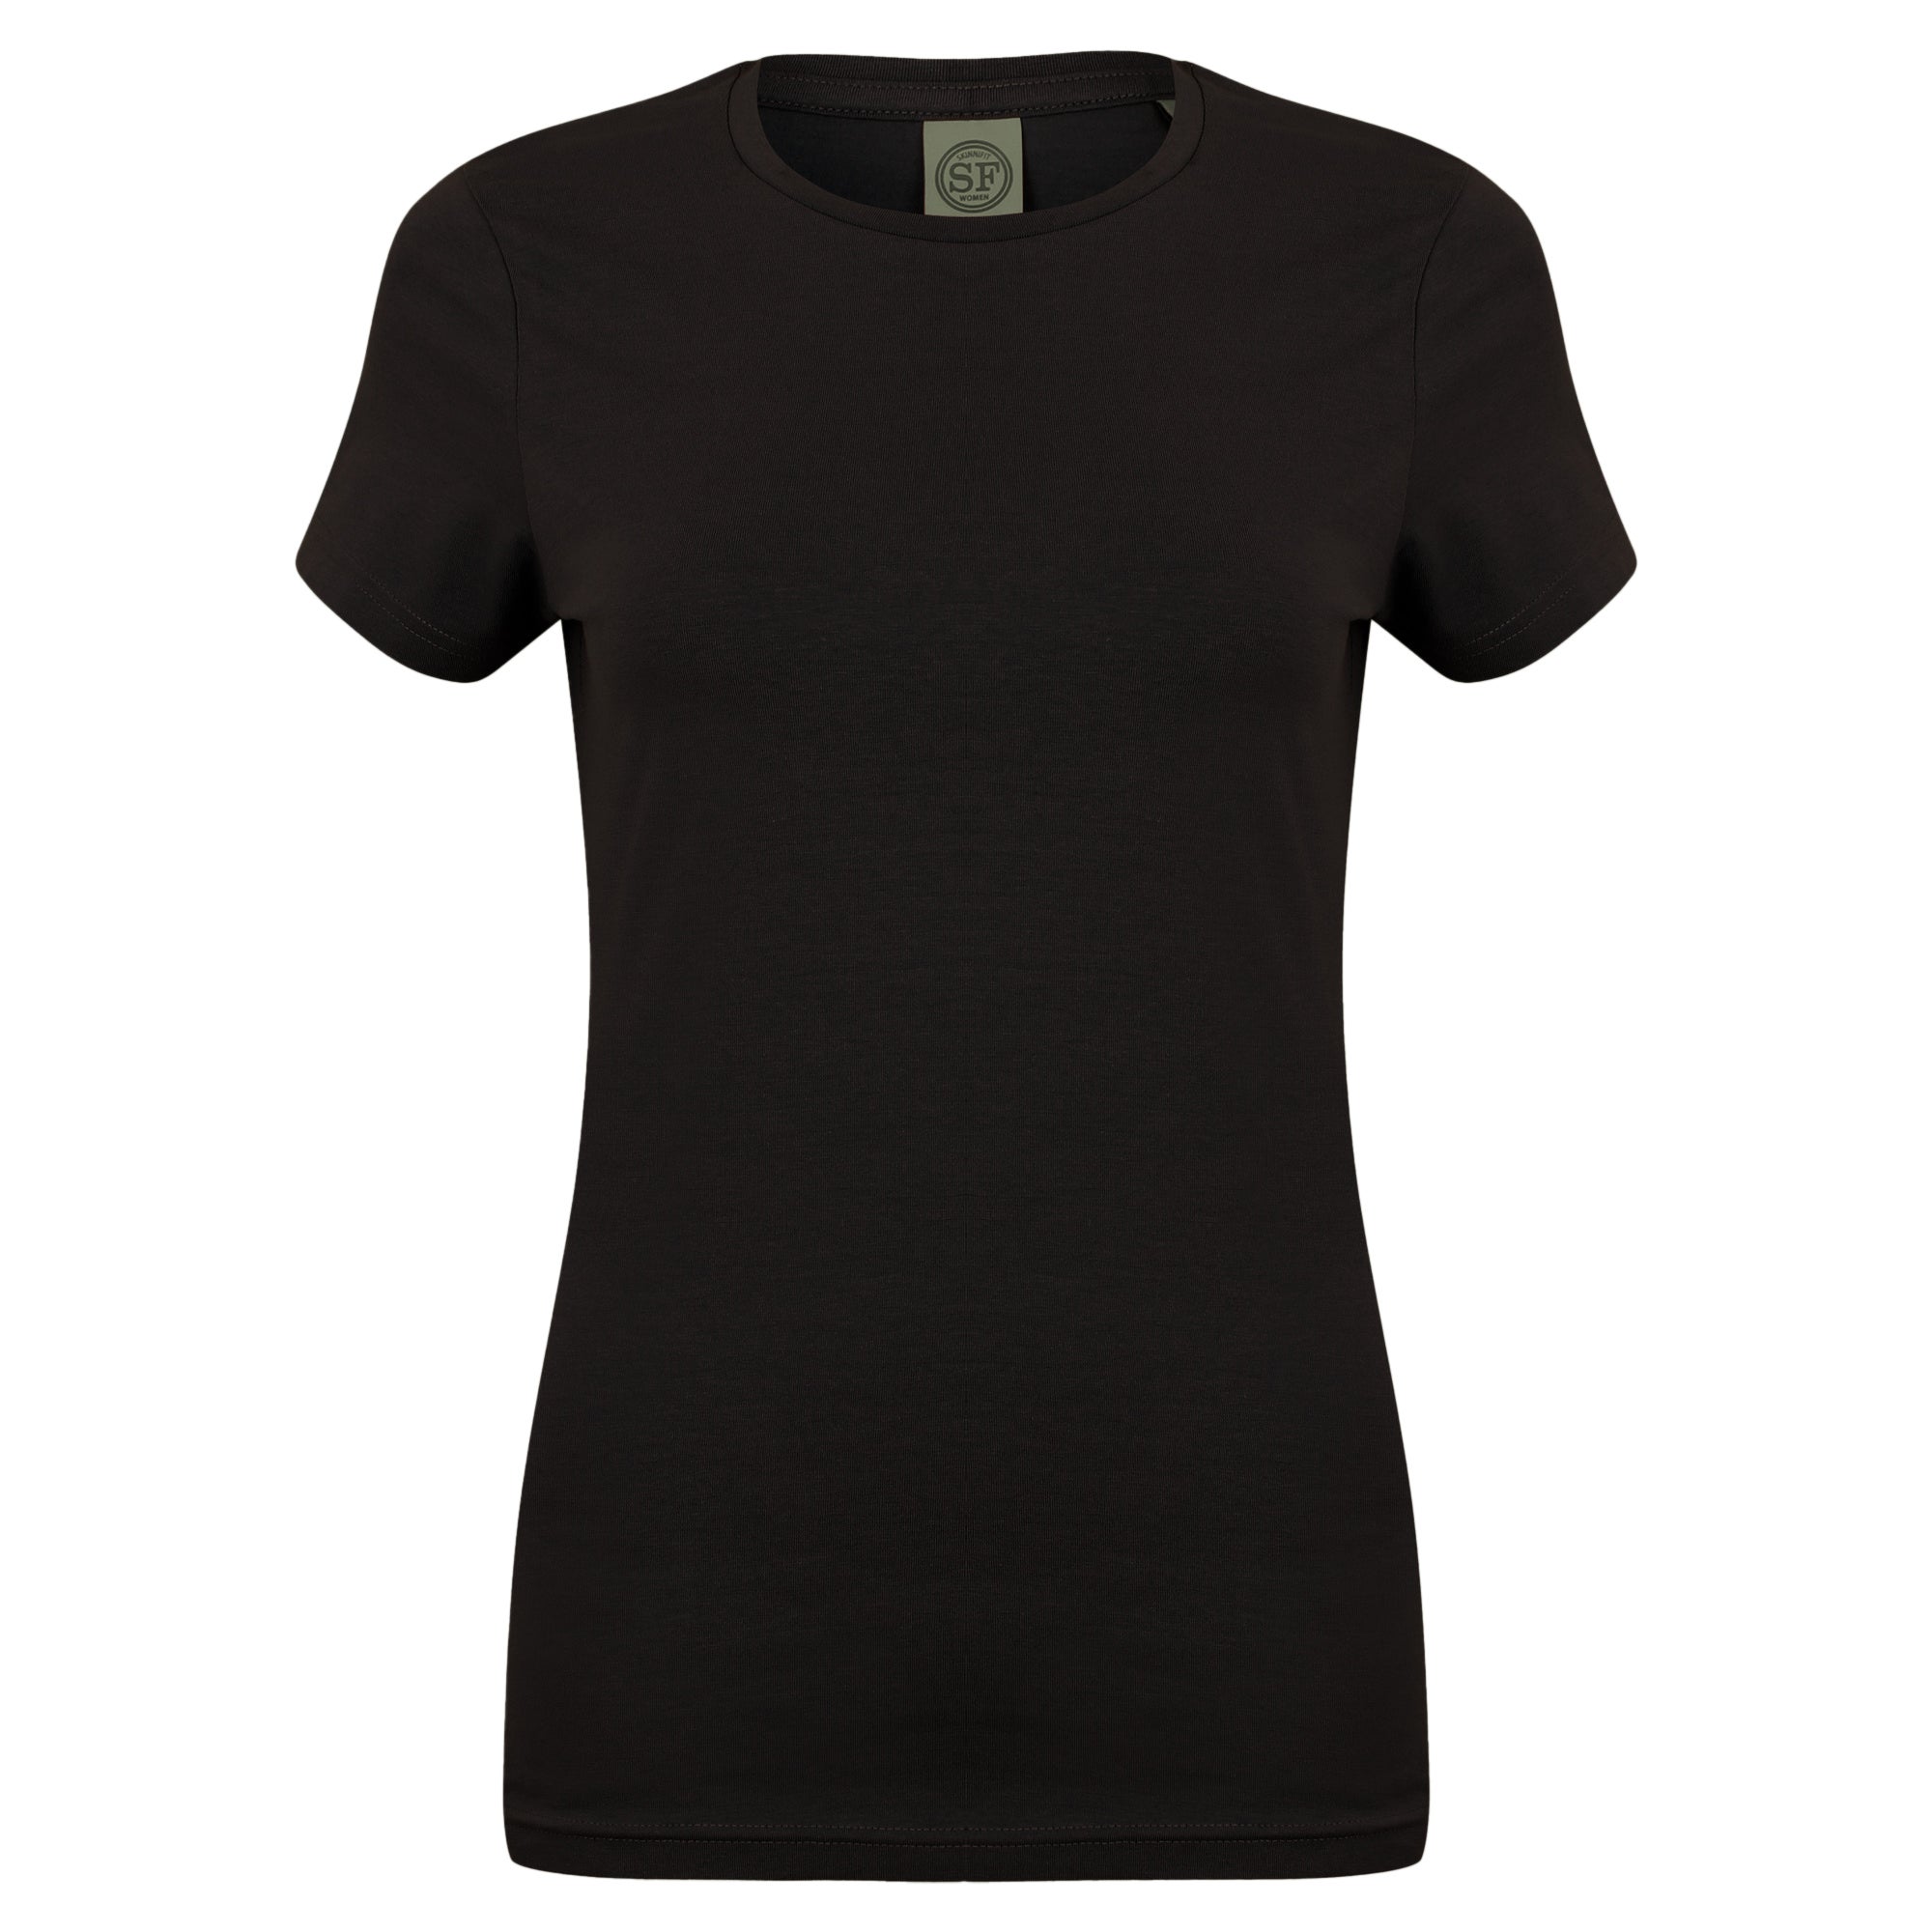 Skinni Fit Womens/Ladies Feel Good Stretch Short Sleeve T-Shirt